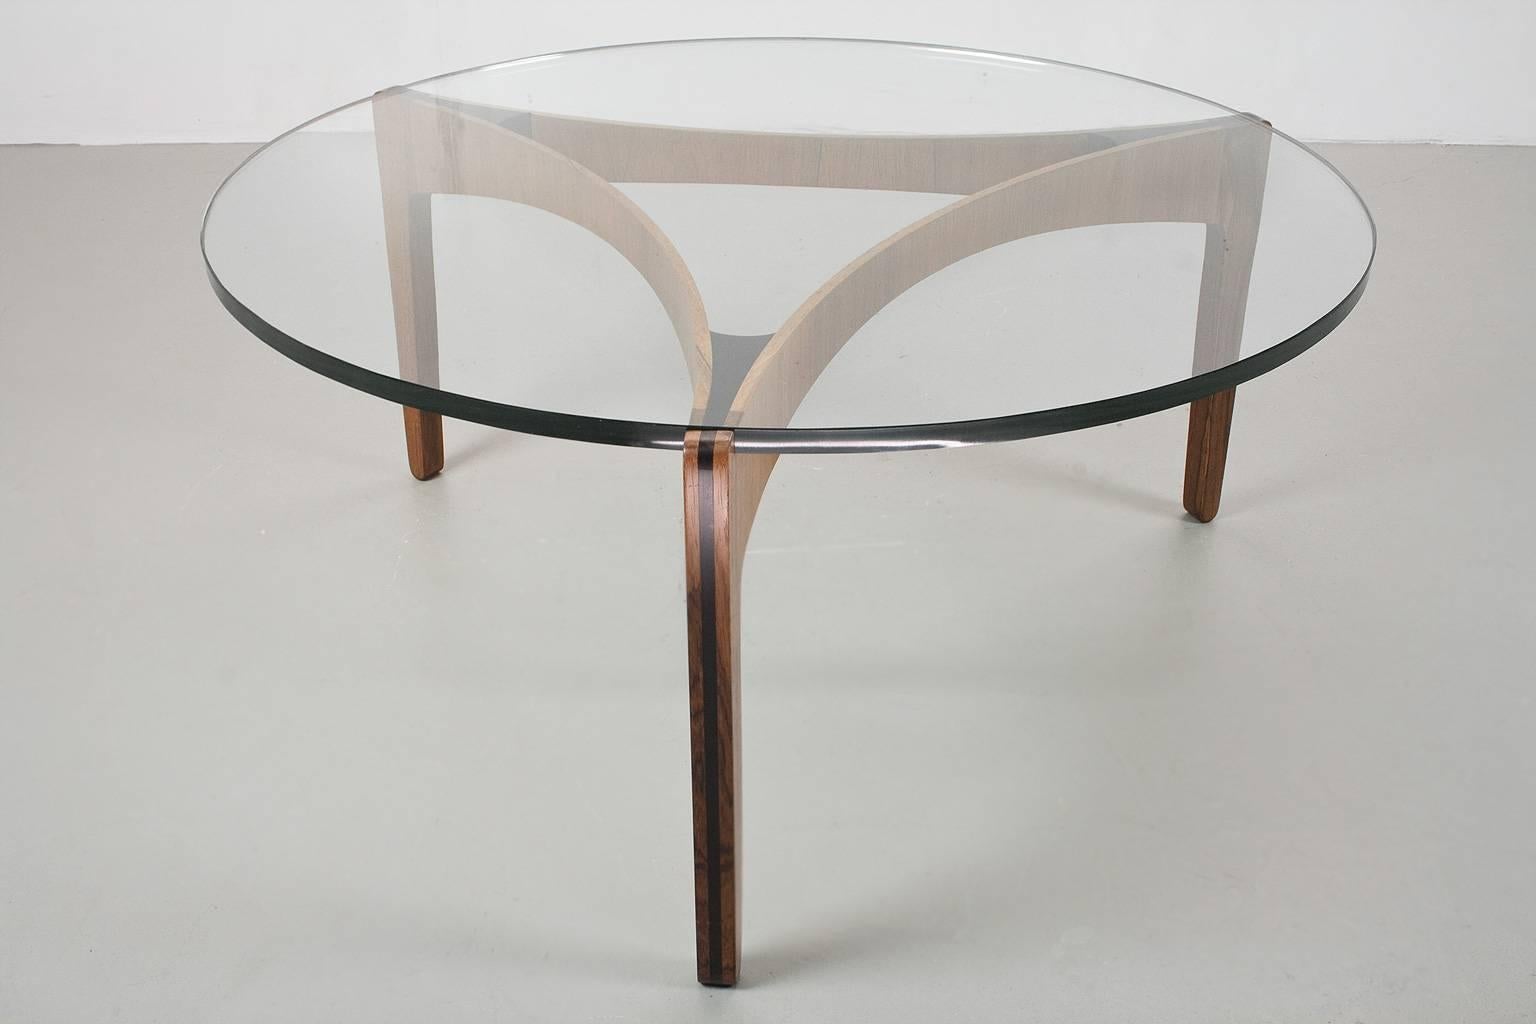 Oiled Scandinavian Modern Rosewood coffee Table by Sven Ellekaer 1960s Danish Design